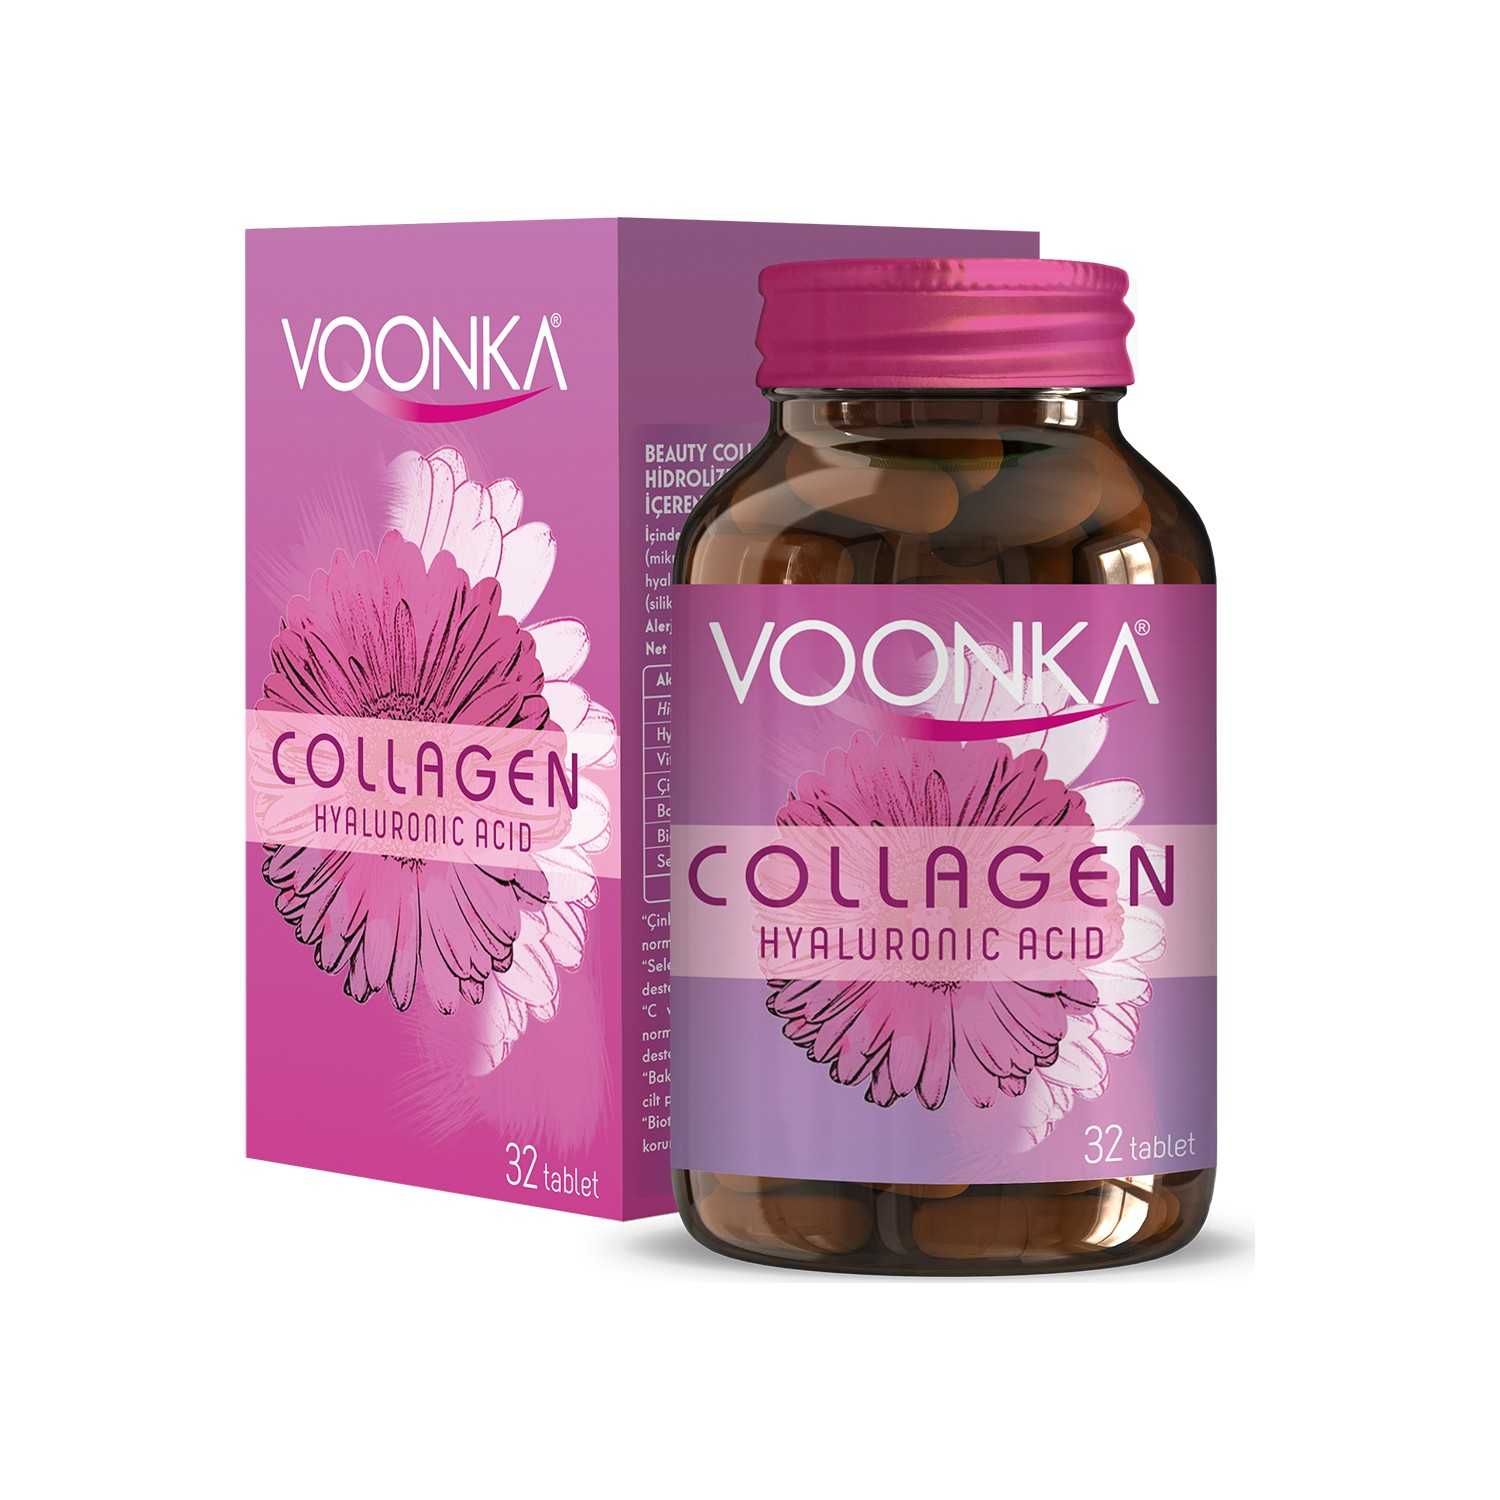 Voonka Collagen Beauty Hyaluronic Acid